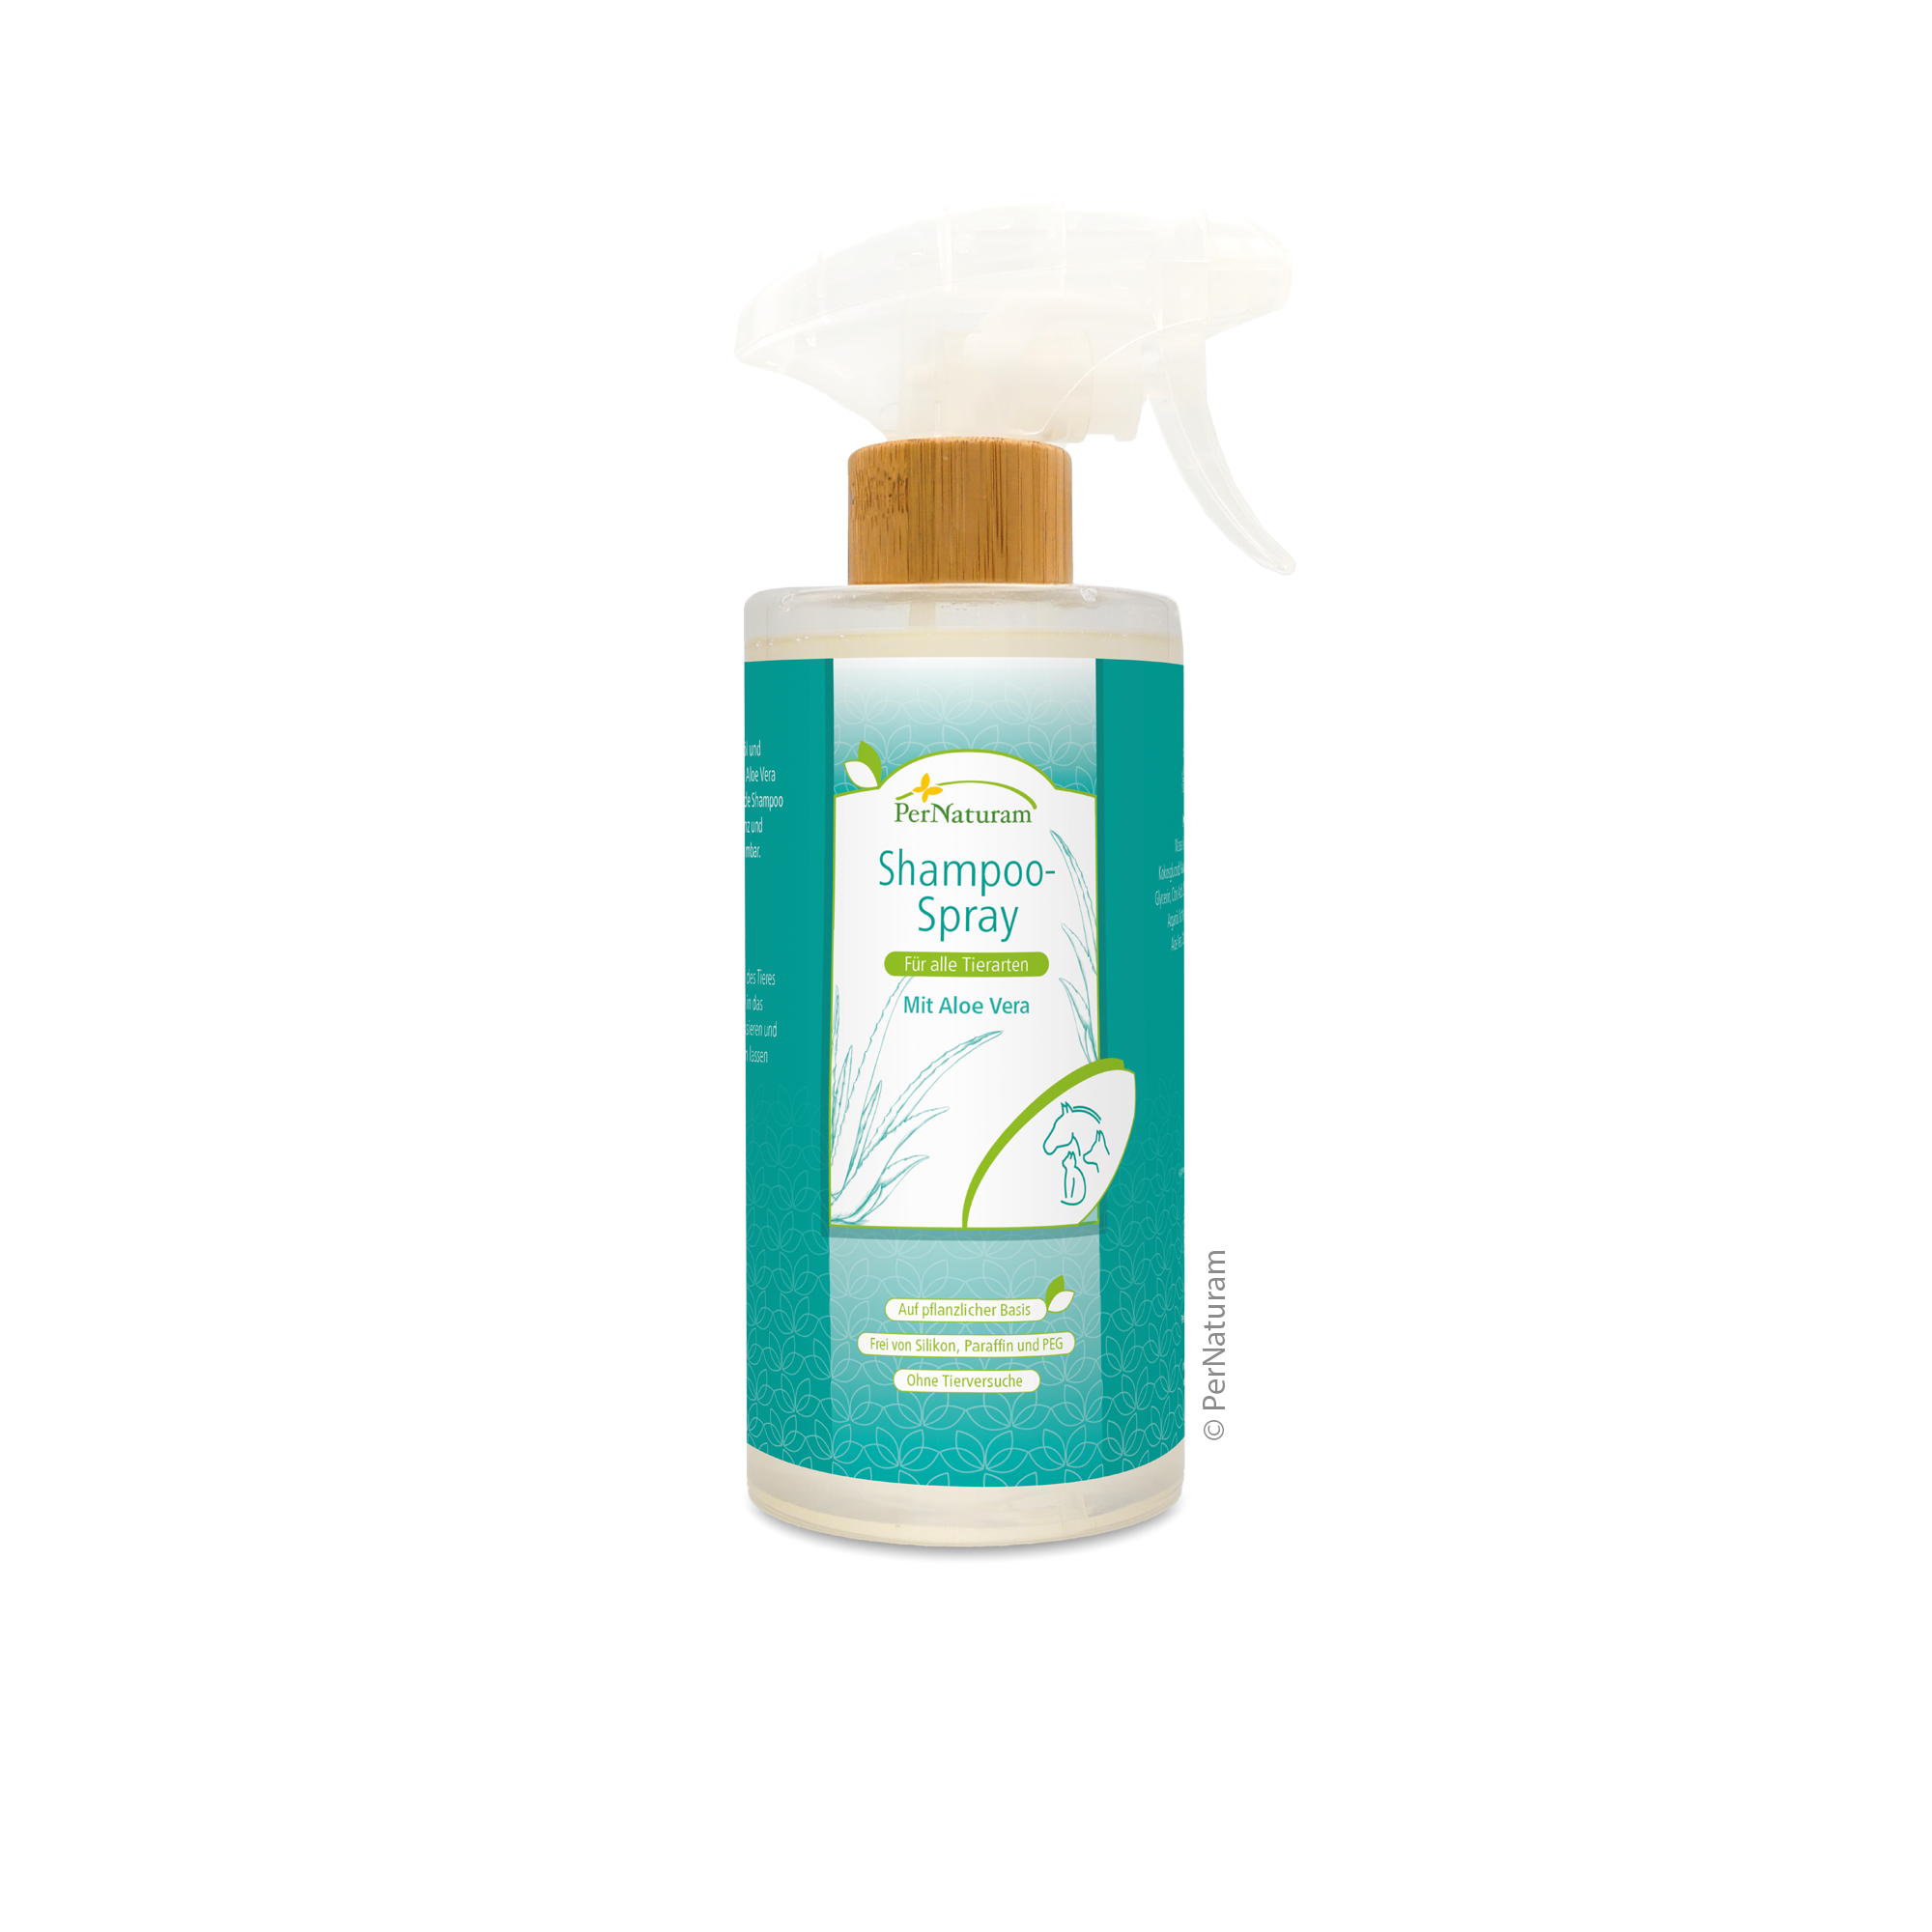 PerNaturam® Shampoo-Spray